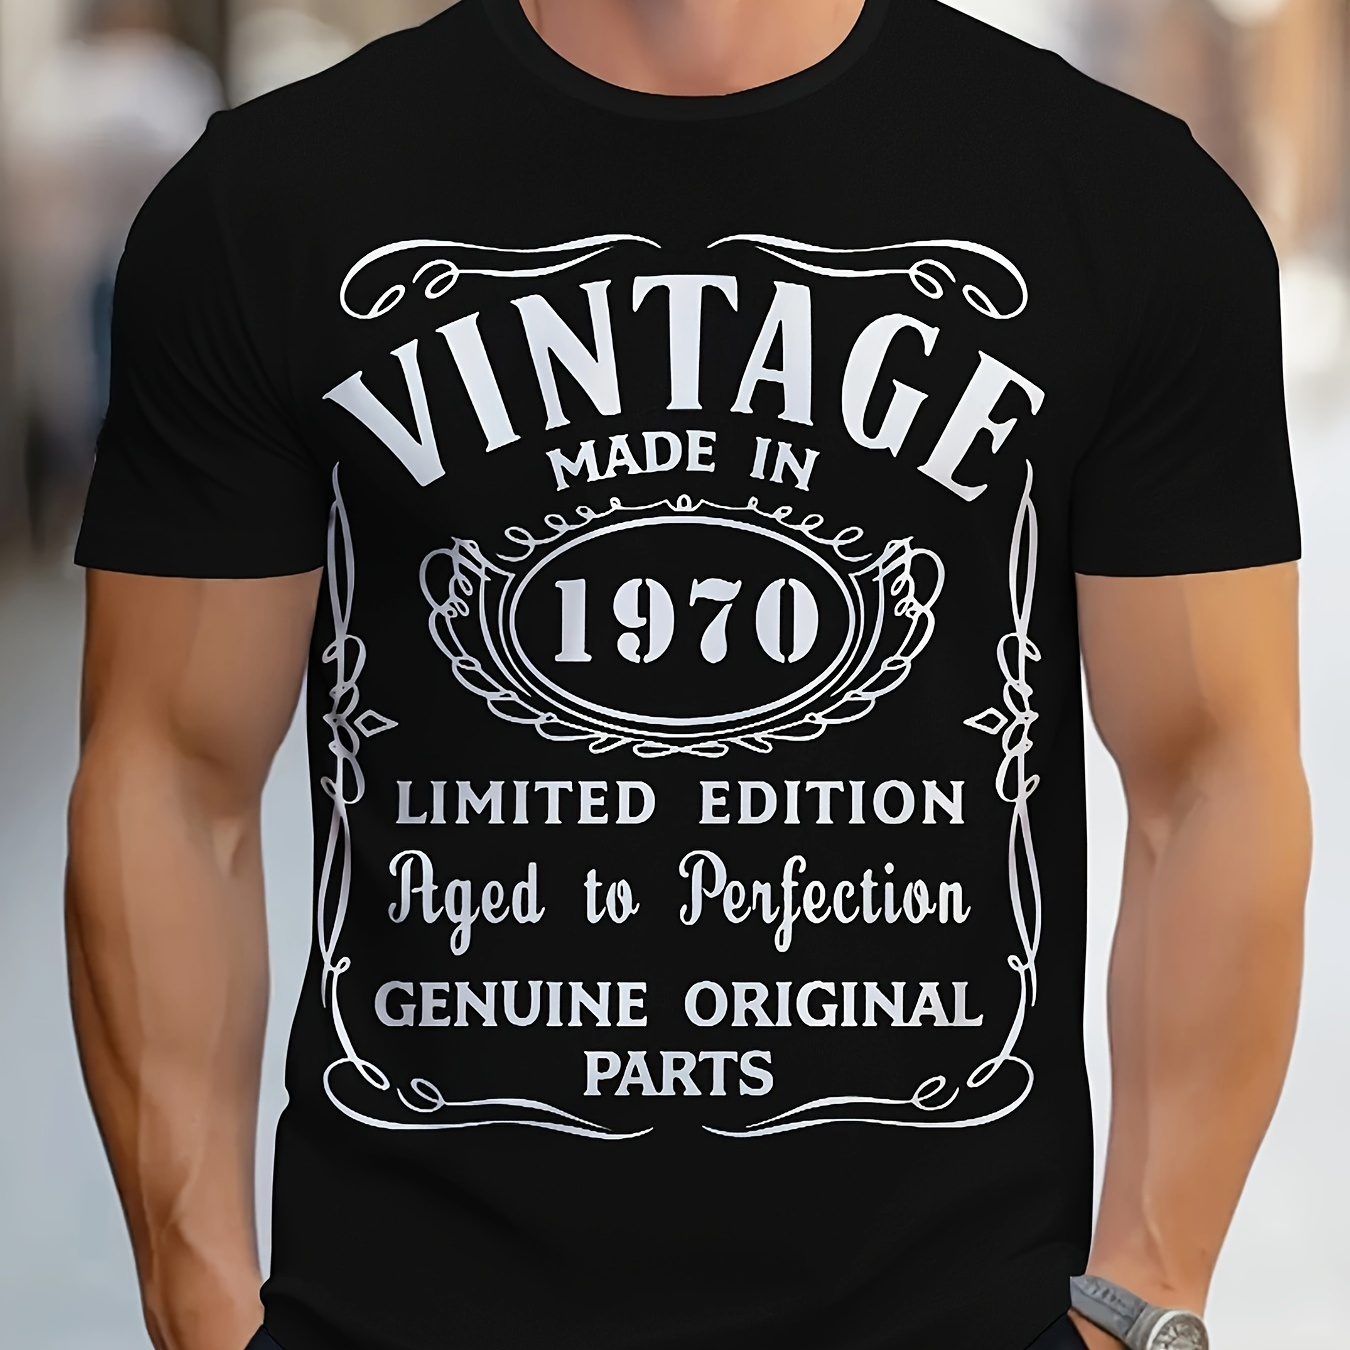 

Men's Vintage 1970 Graphic Print T-shirt, Short Sleeve Crew Neck Tee, Men's Clothing For Summer Outdoor